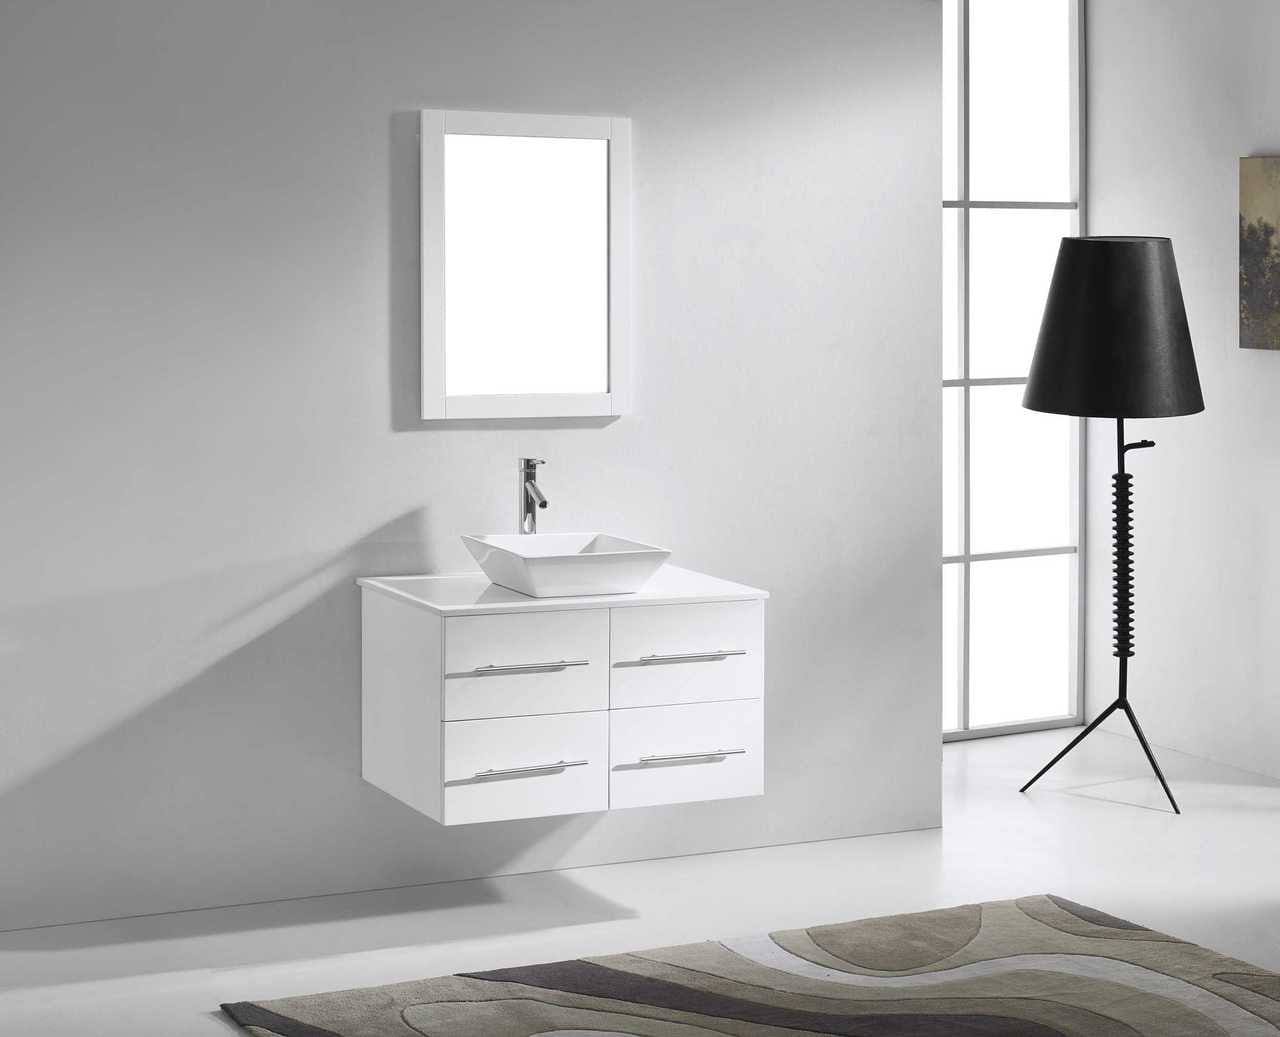 Virtu USA Marsala 35 Single Bathroom Vanity Set in White